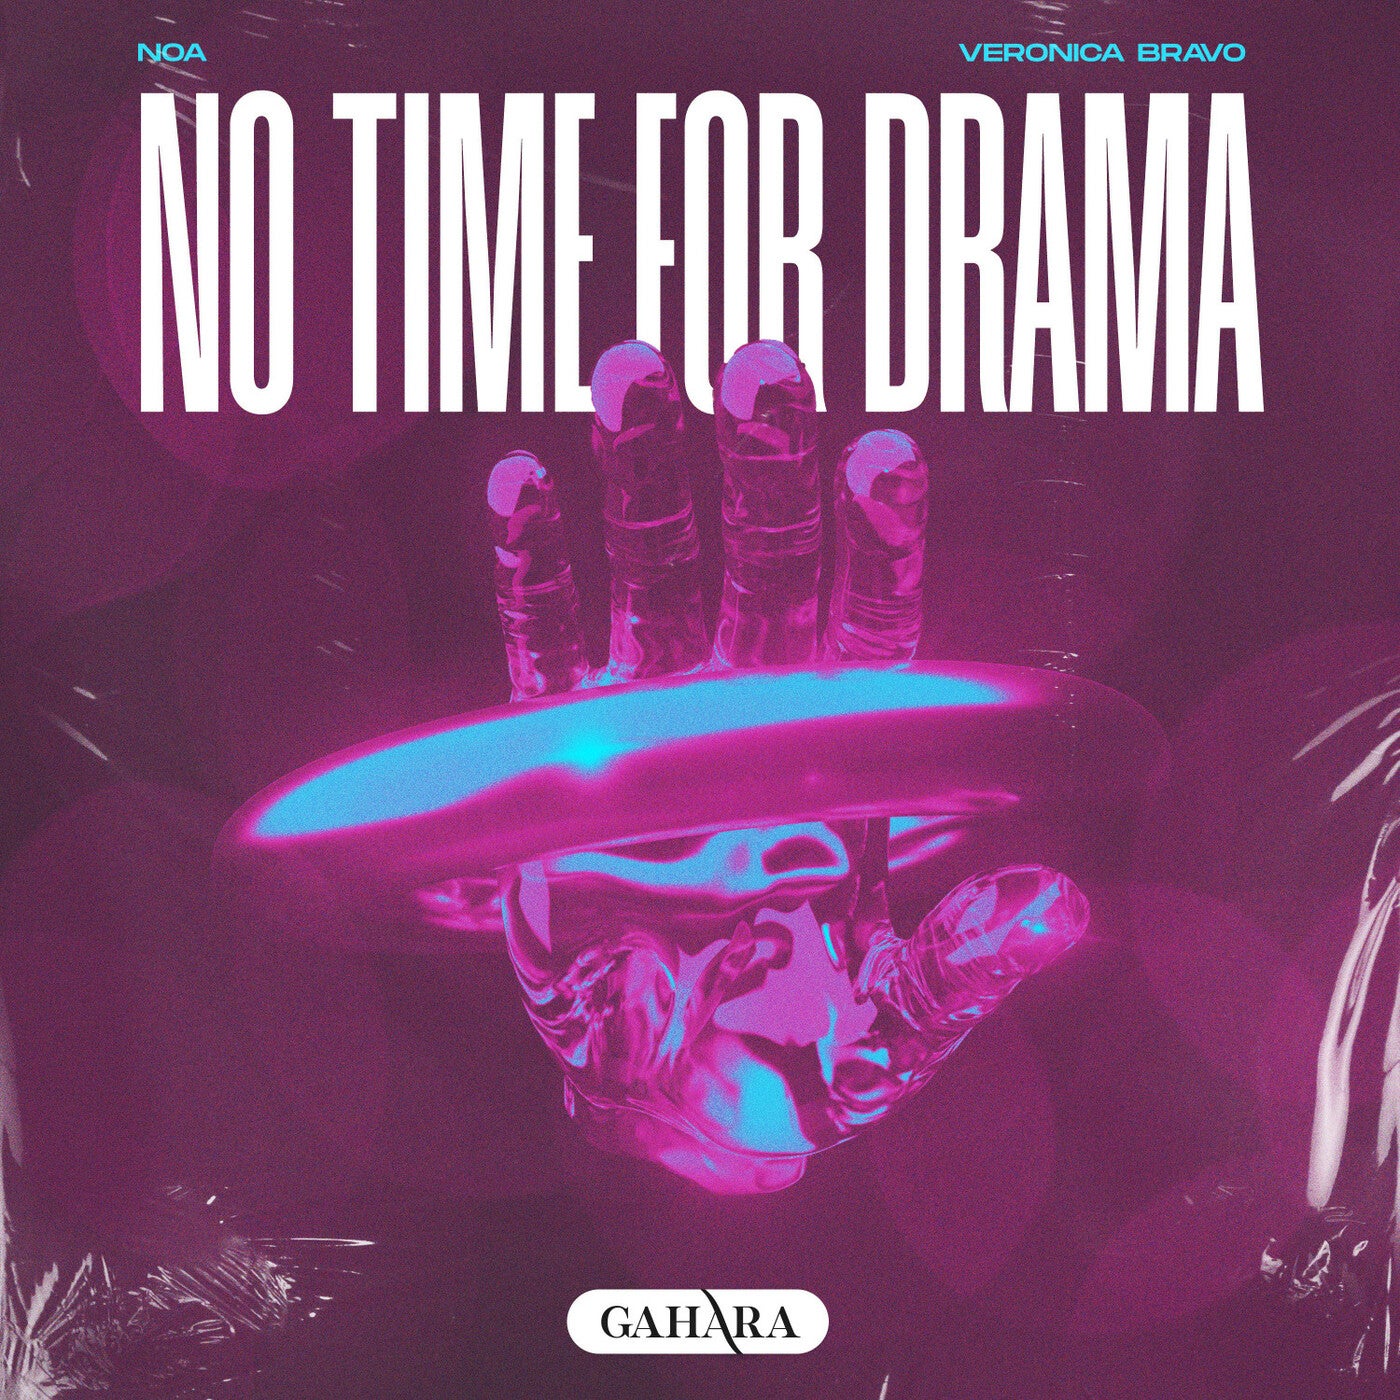 No Time For Drama